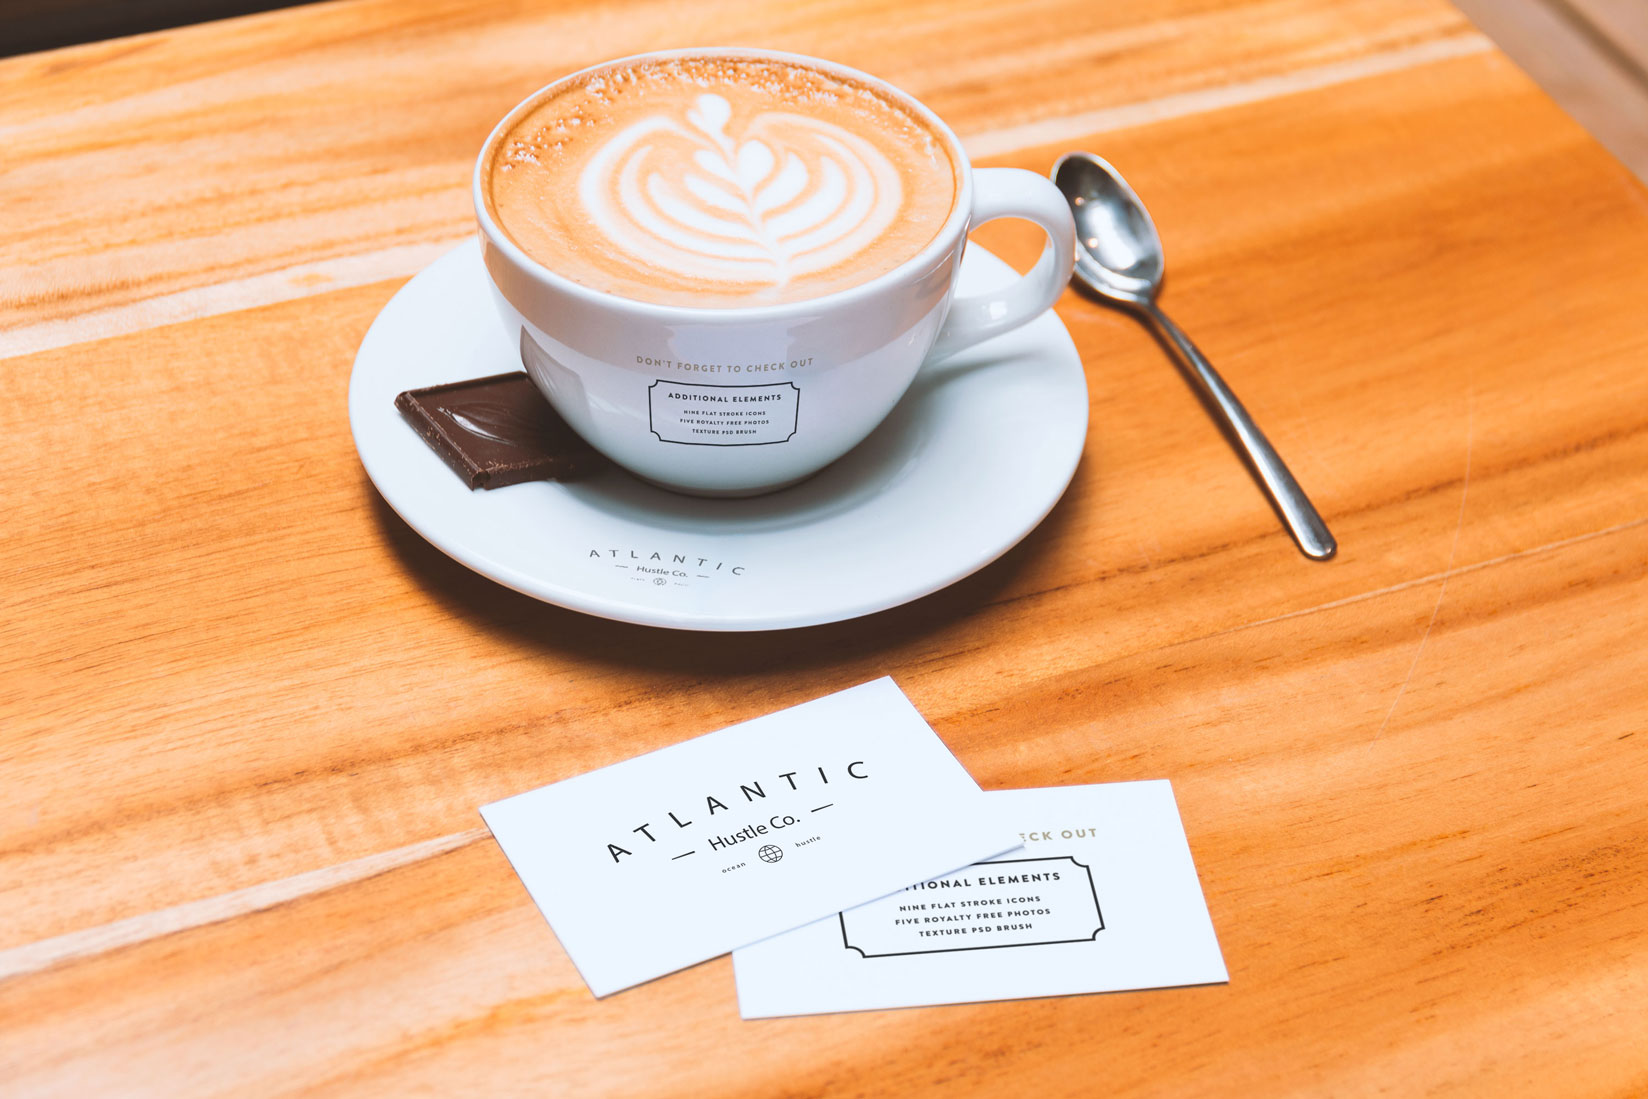 企业VI设计企业名片和咖啡杯样机模板 Business Cards and Coffee Cup Mockup插图